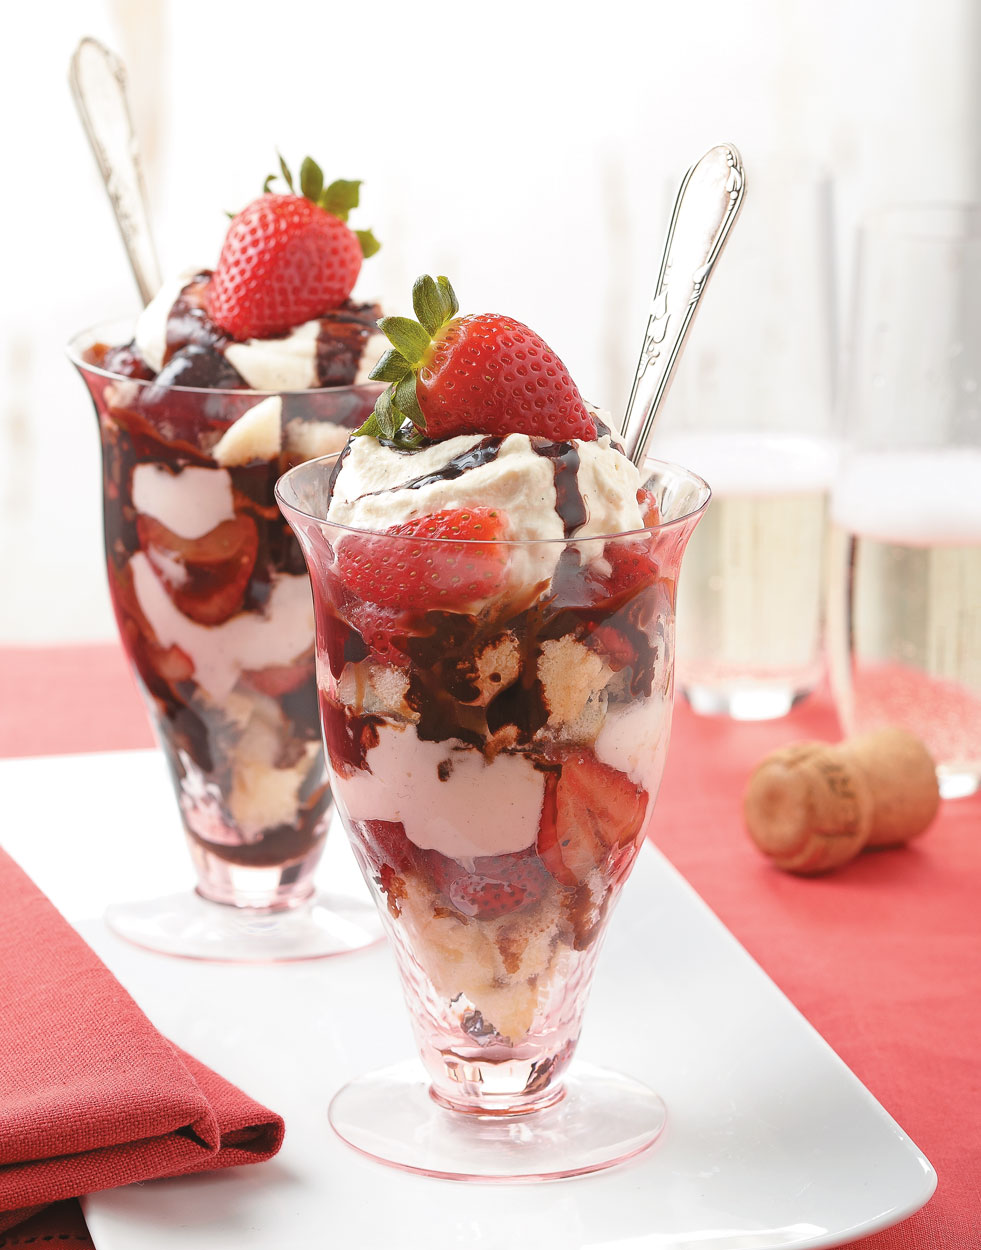 Chocolate-Balsamic Strawberry Trifles with Mascarpone Whipped Cream